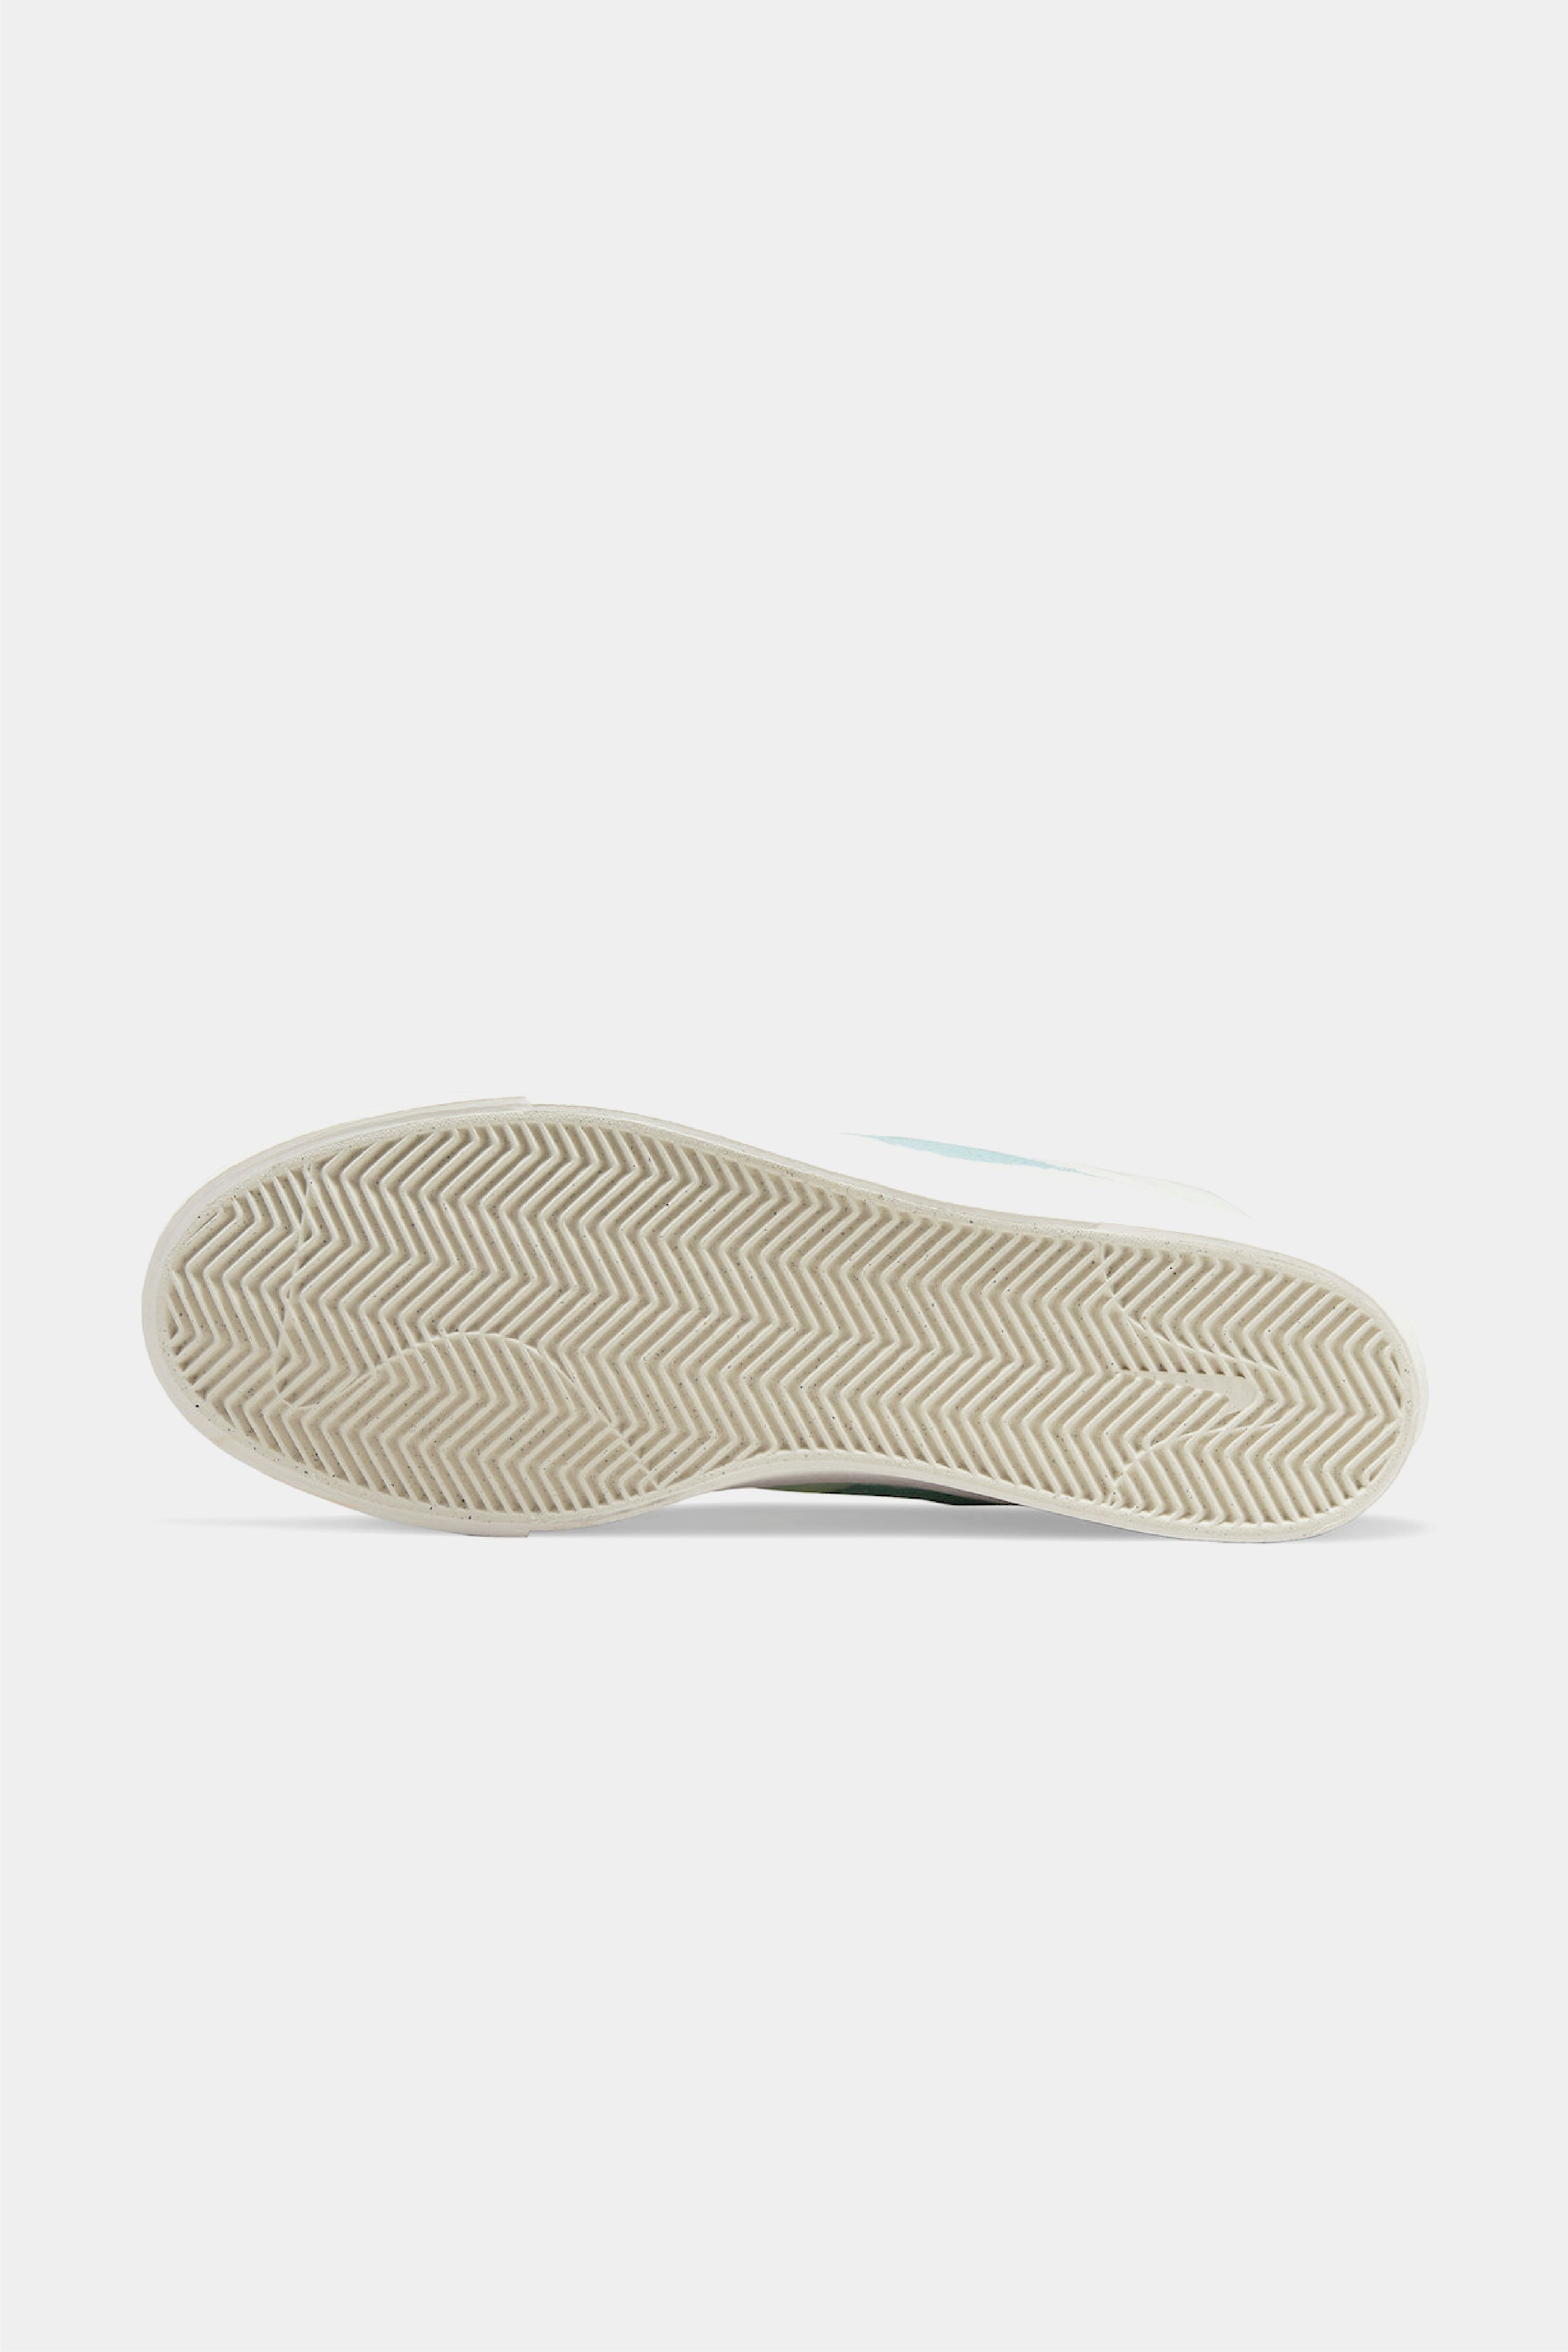 Selectshop FRAME - NIKE SB Nike SB Blazer Court Mid Premium "Barely Green" Footwear Dubai